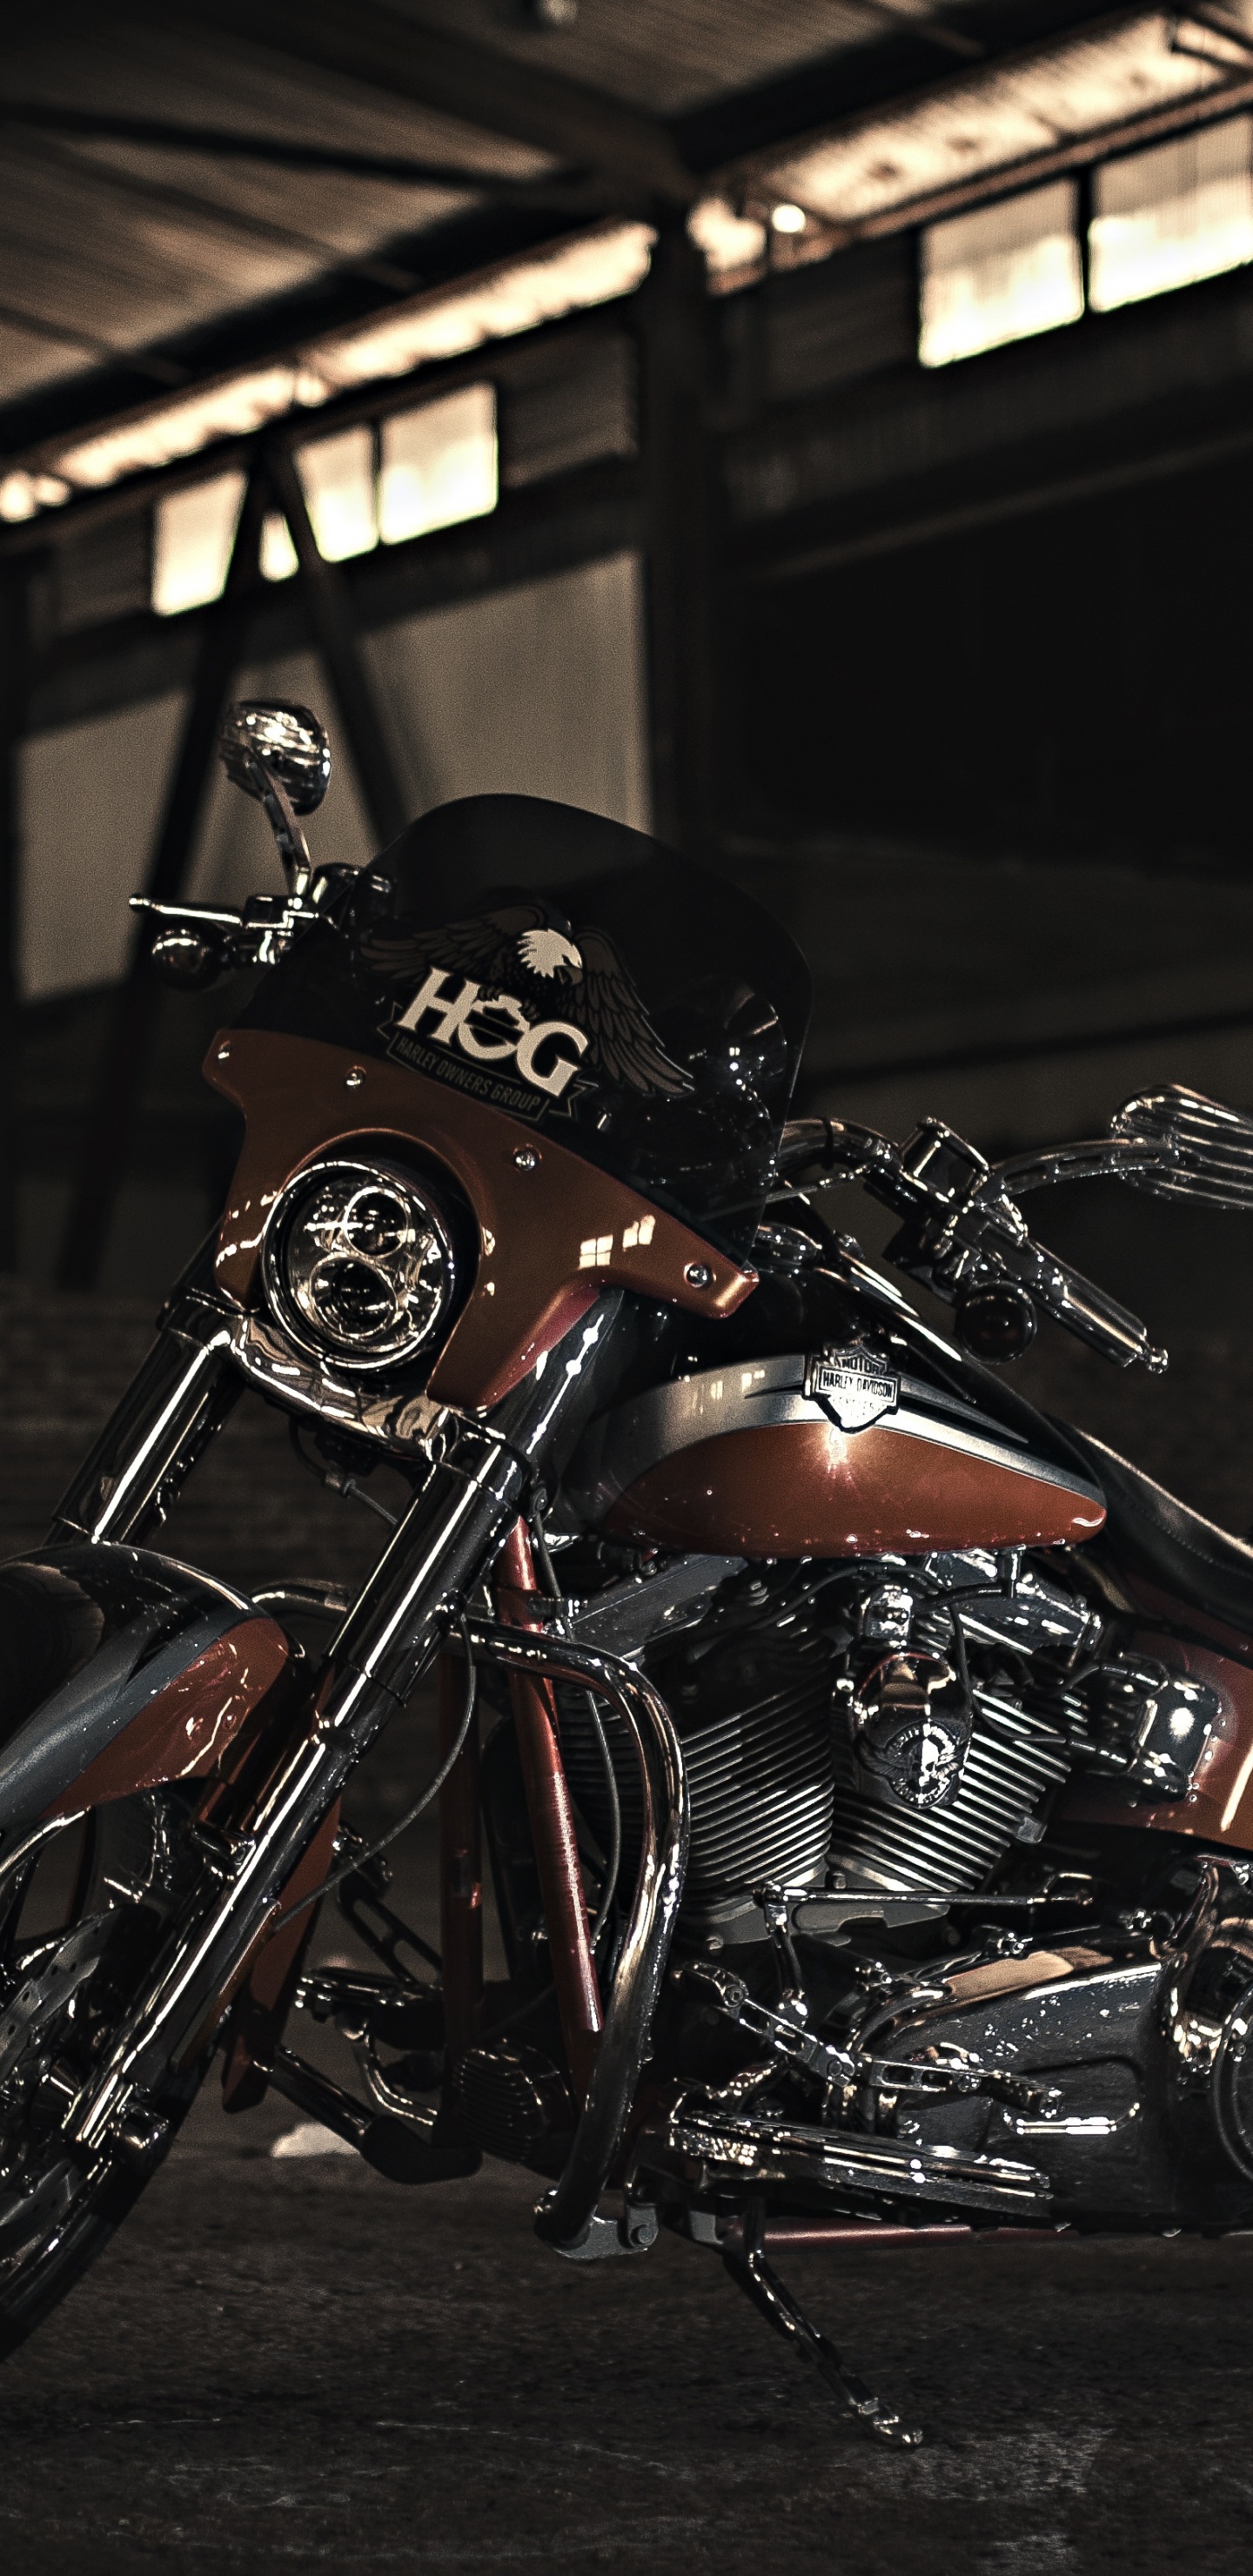 Motocicleta Cruiser Negra y Plateada. Wallpaper in 1440x2960 Resolution